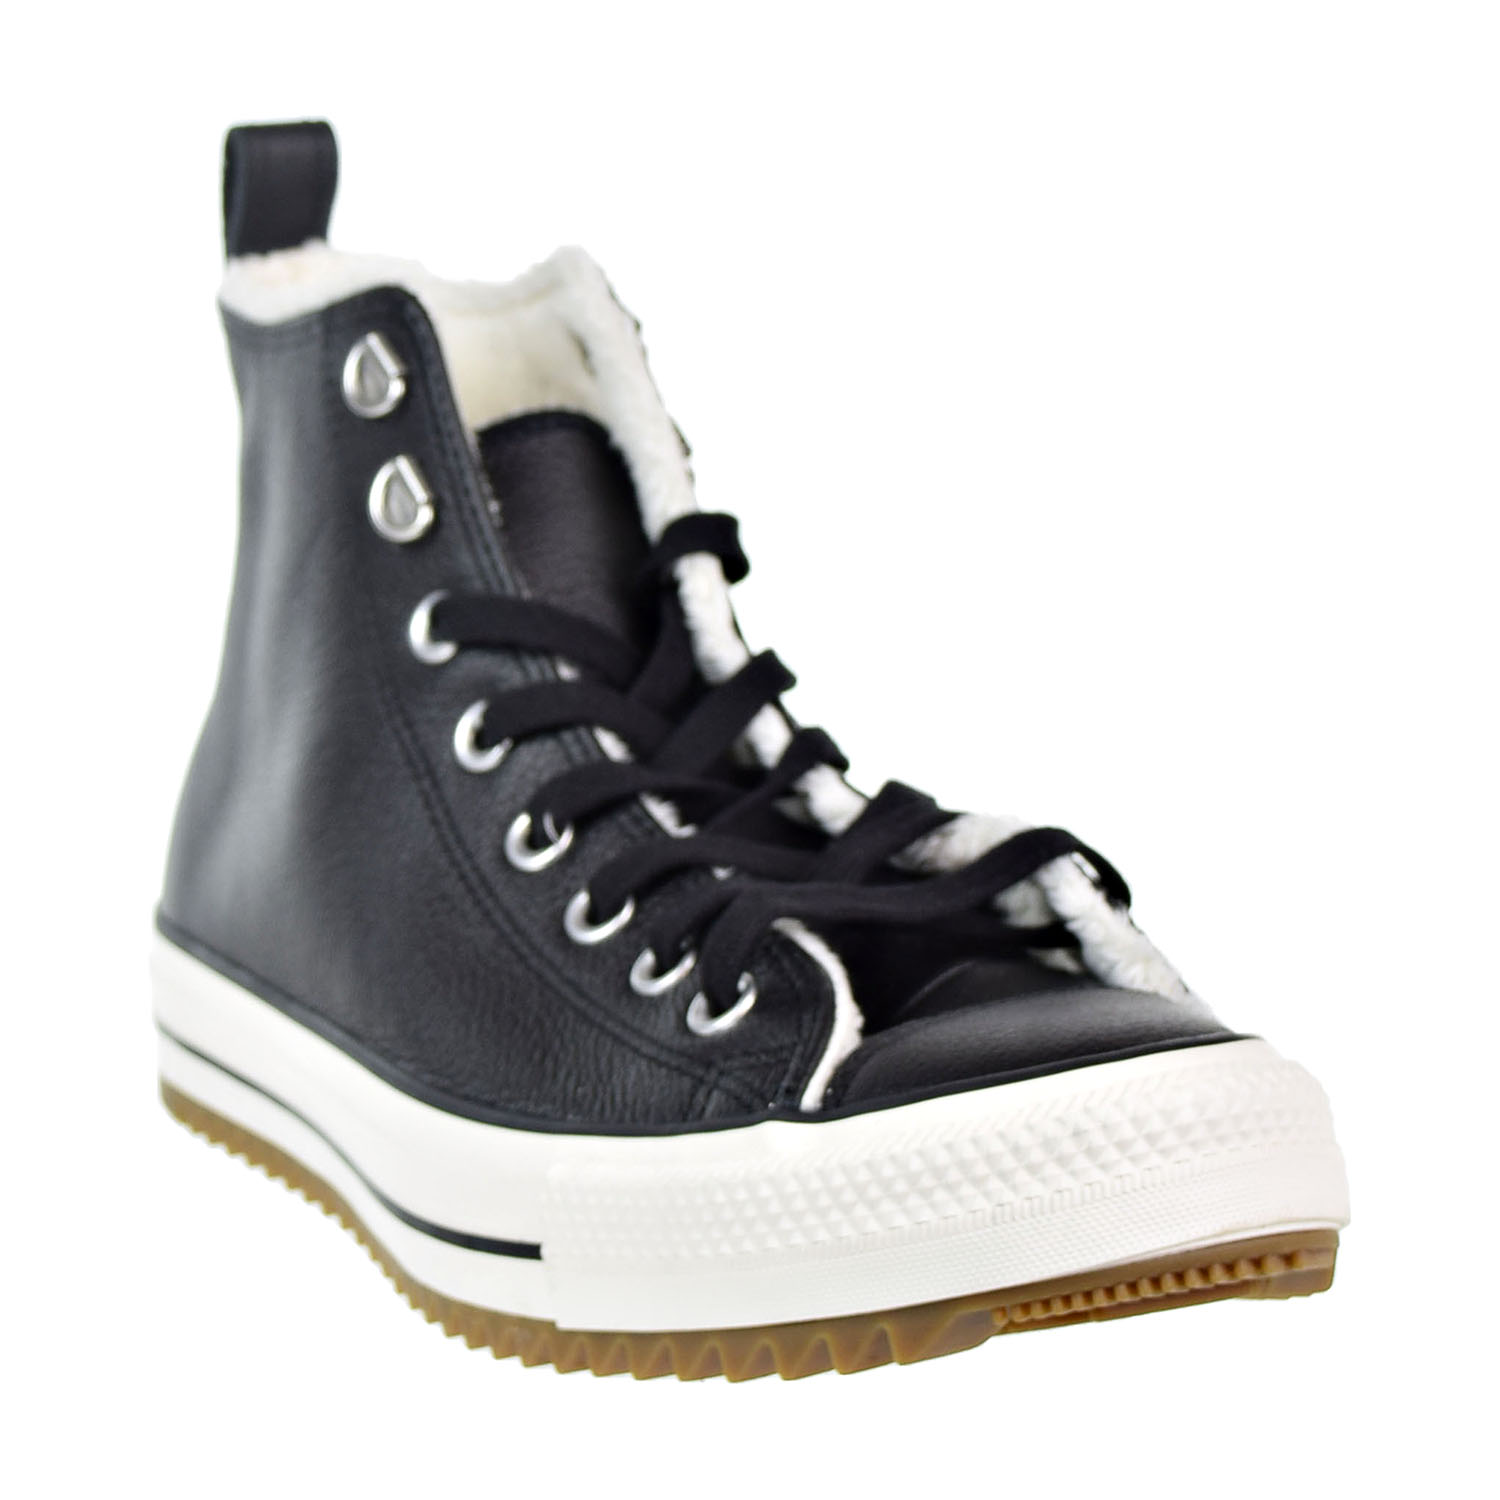 Converse Chuck Taylor All Star Hiker Boot Men's/Big Kids Shoes Black-Egret-Gum 161512c - image 2 of 6